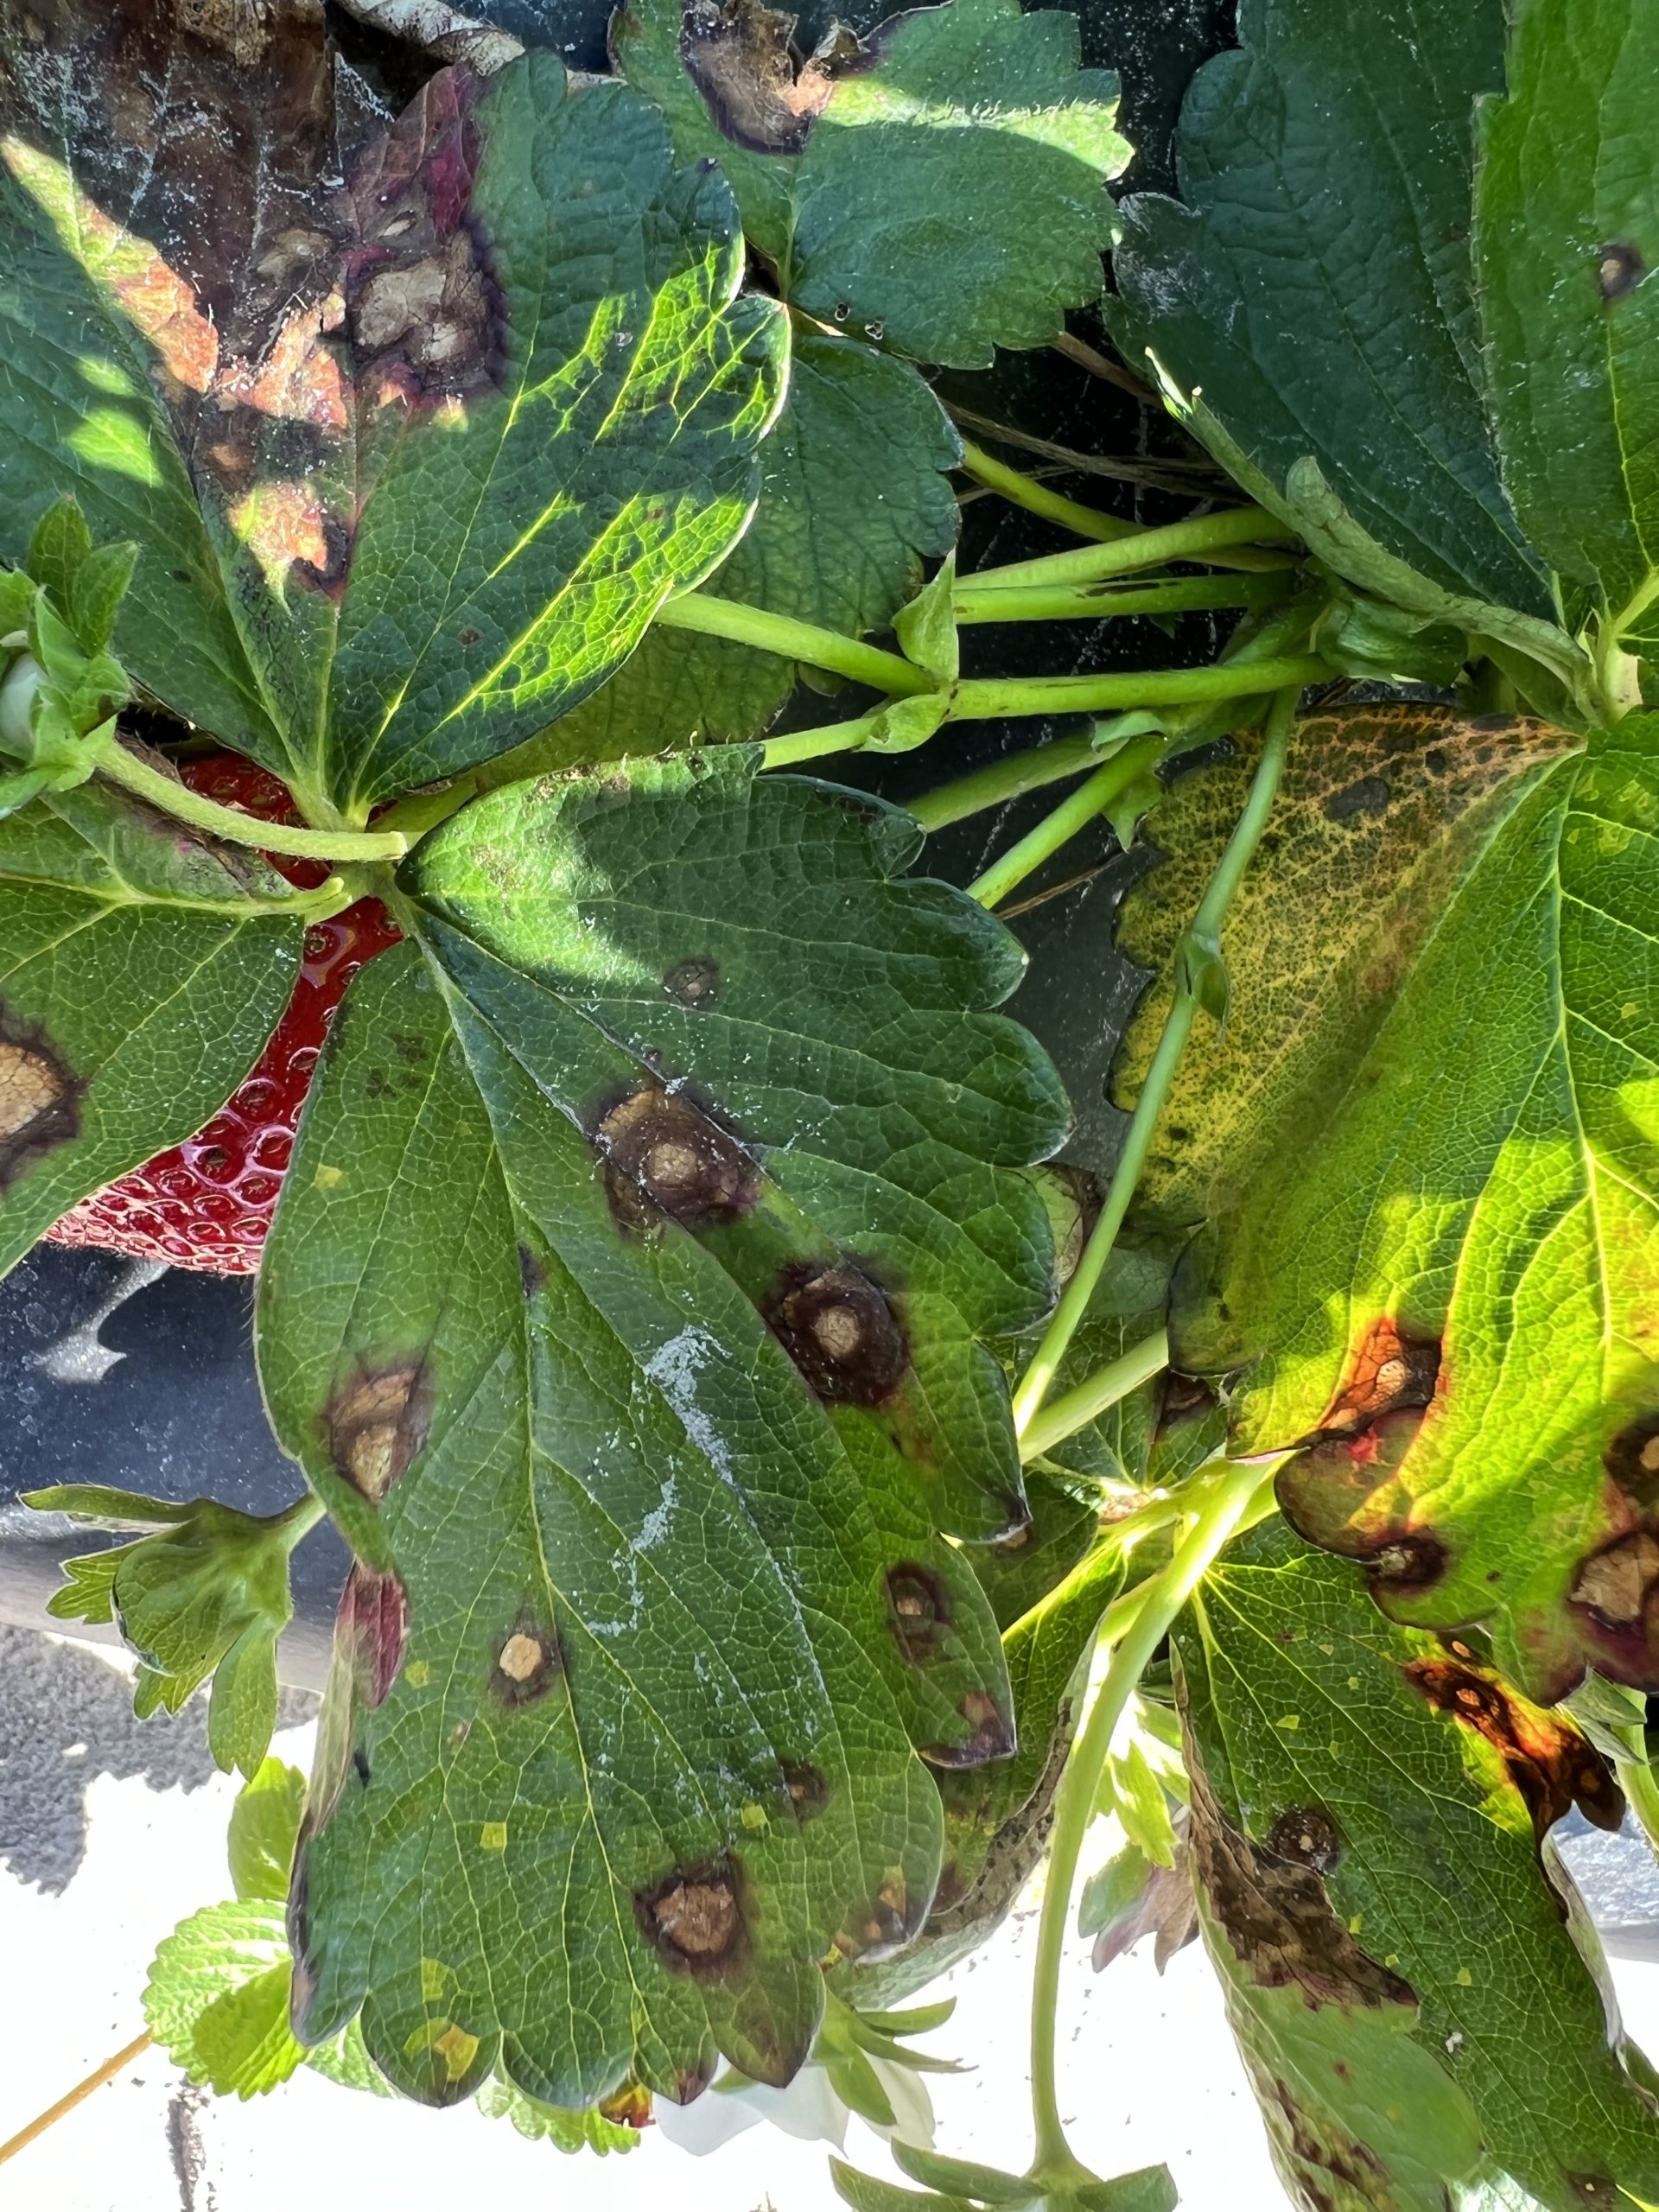 Pestalotia leaf spot on strawberry leaves